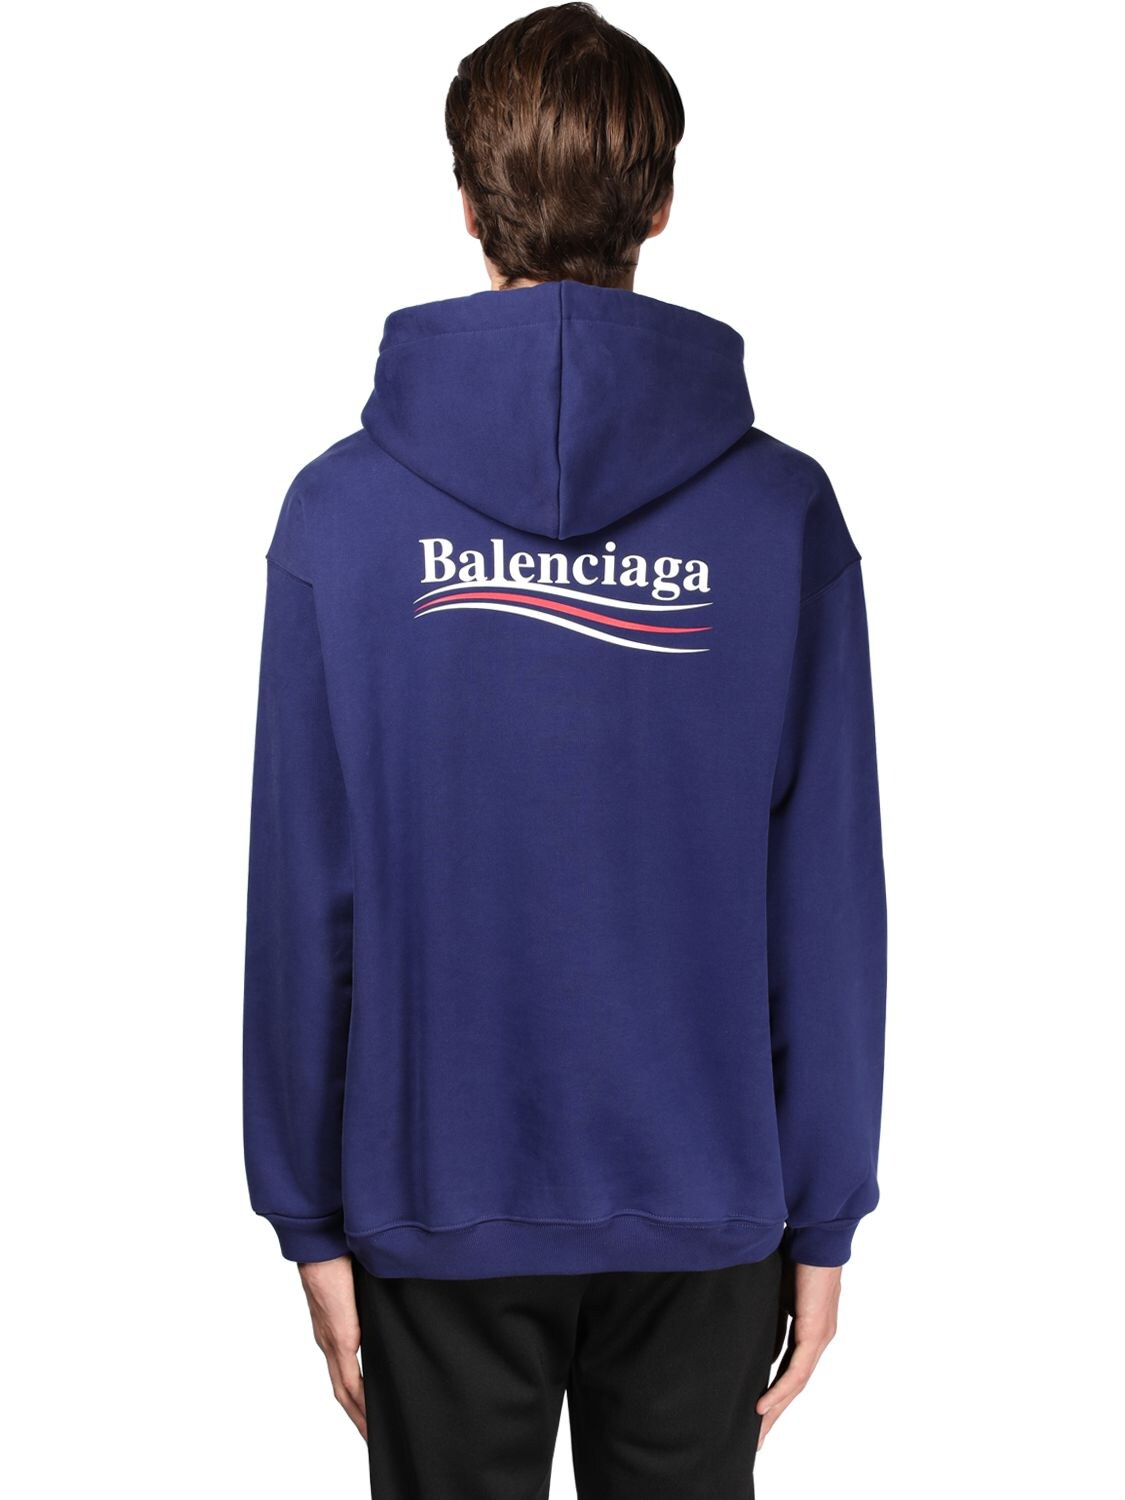 balenciaga election logo sweatshirt